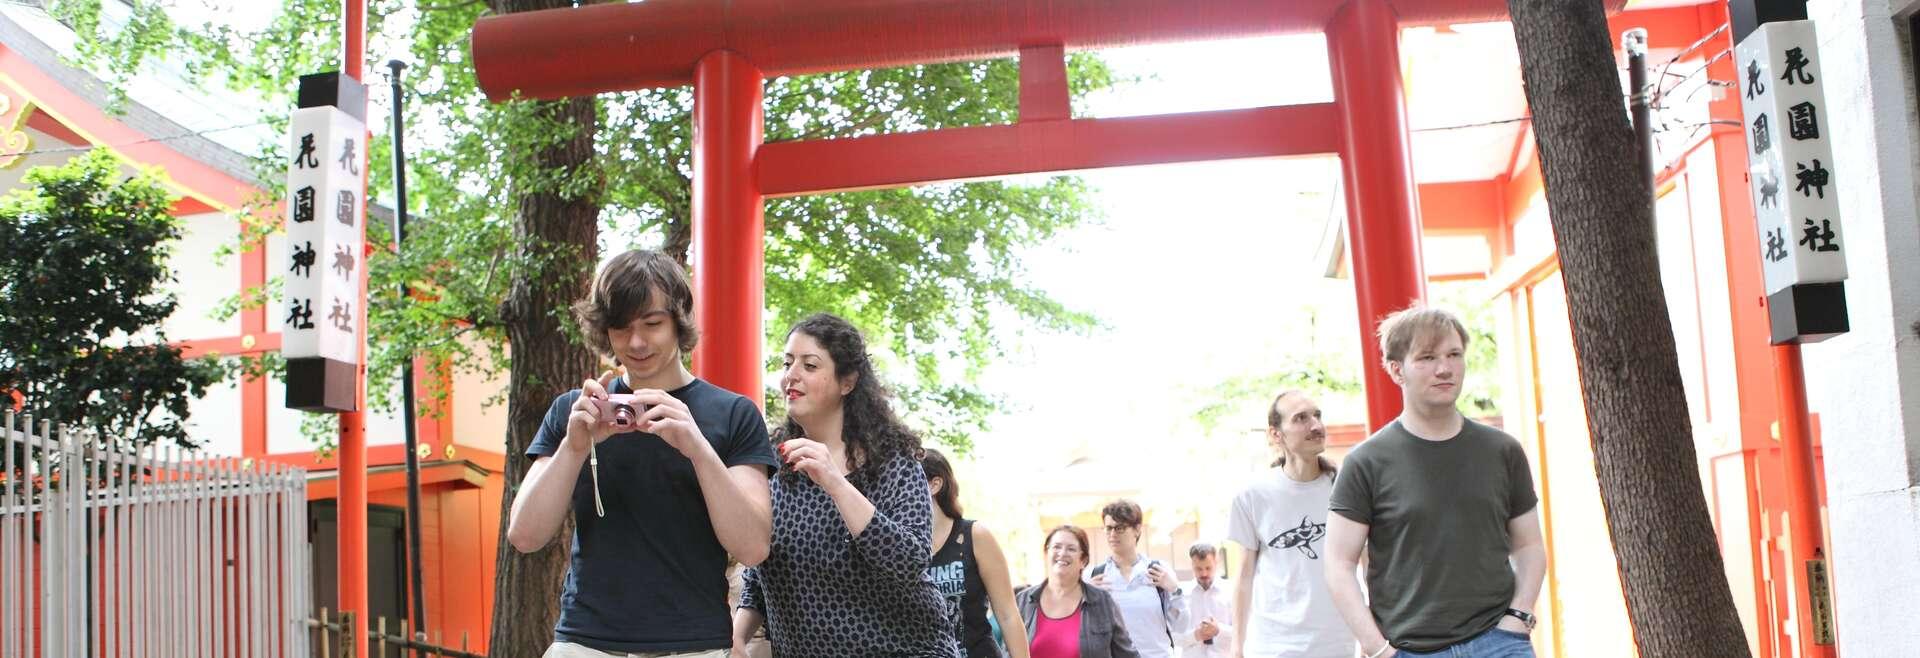 Sprachaufenthalt Japan, Tokio - Genki Japanese School Tokio - Studenten